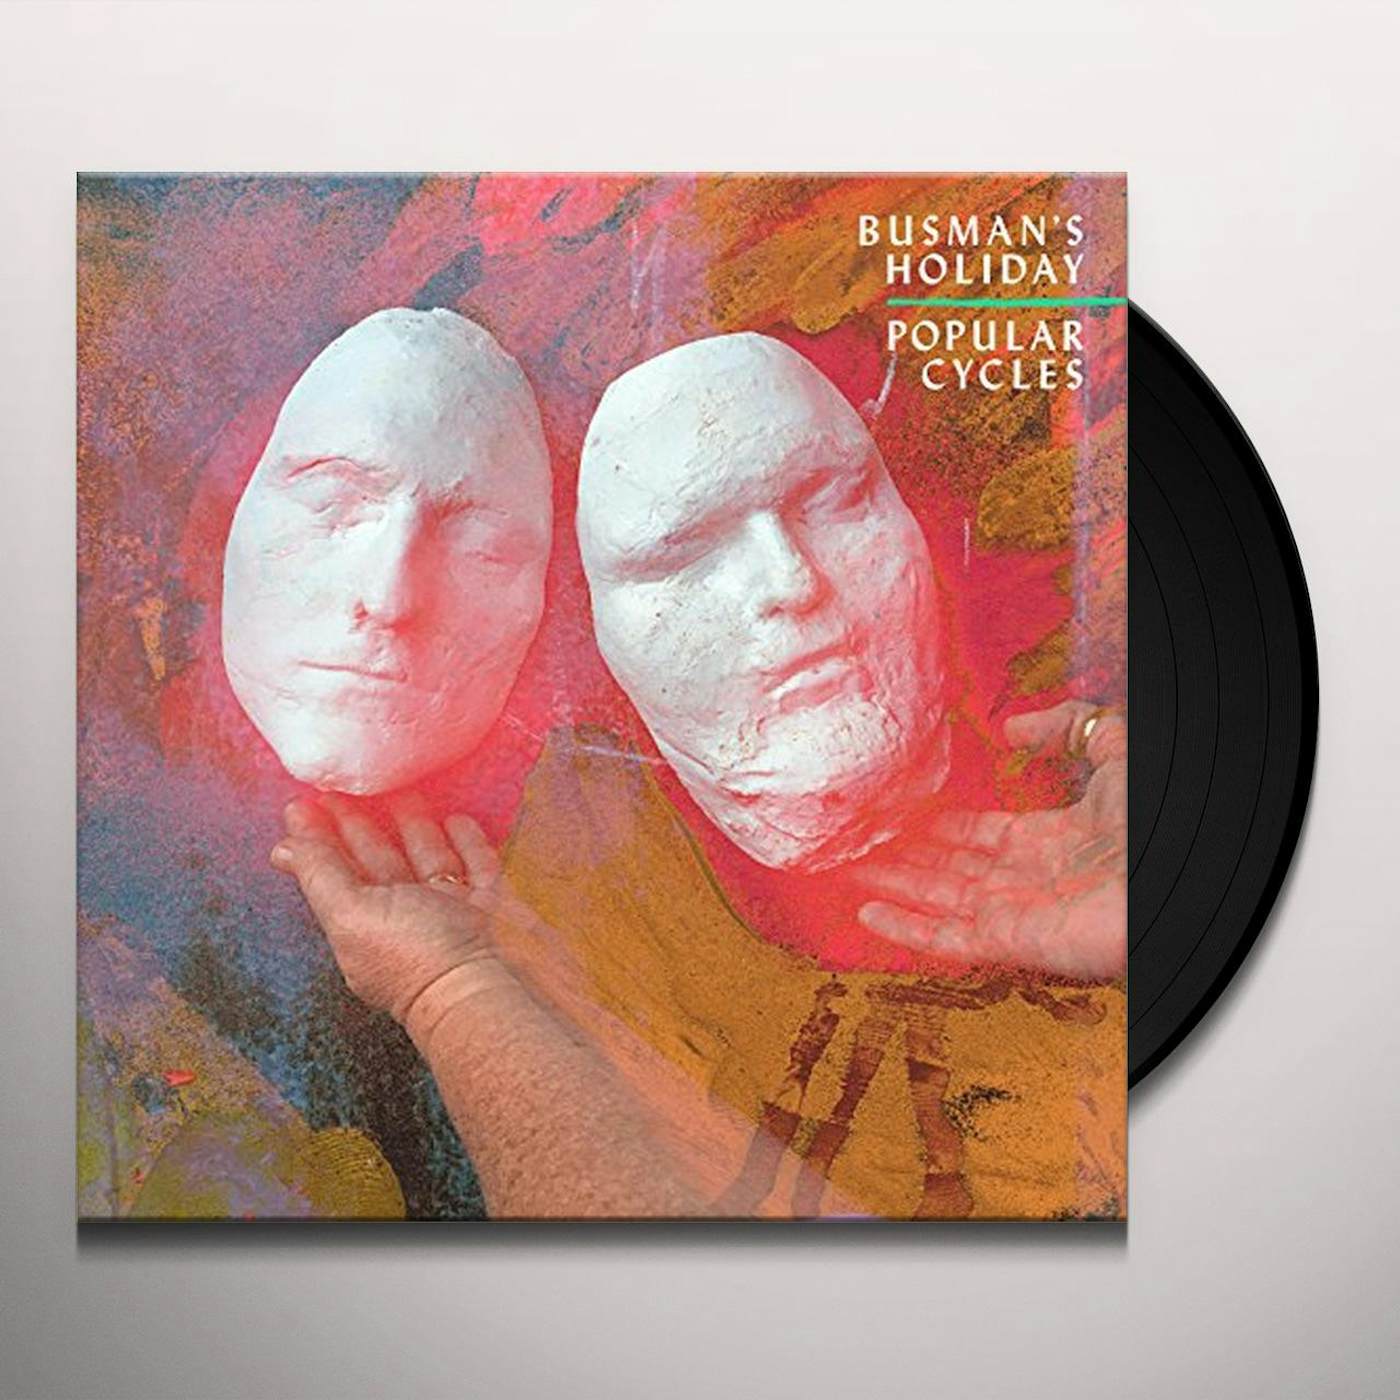 Busman's Holiday Popular Cycles Vinyl Record